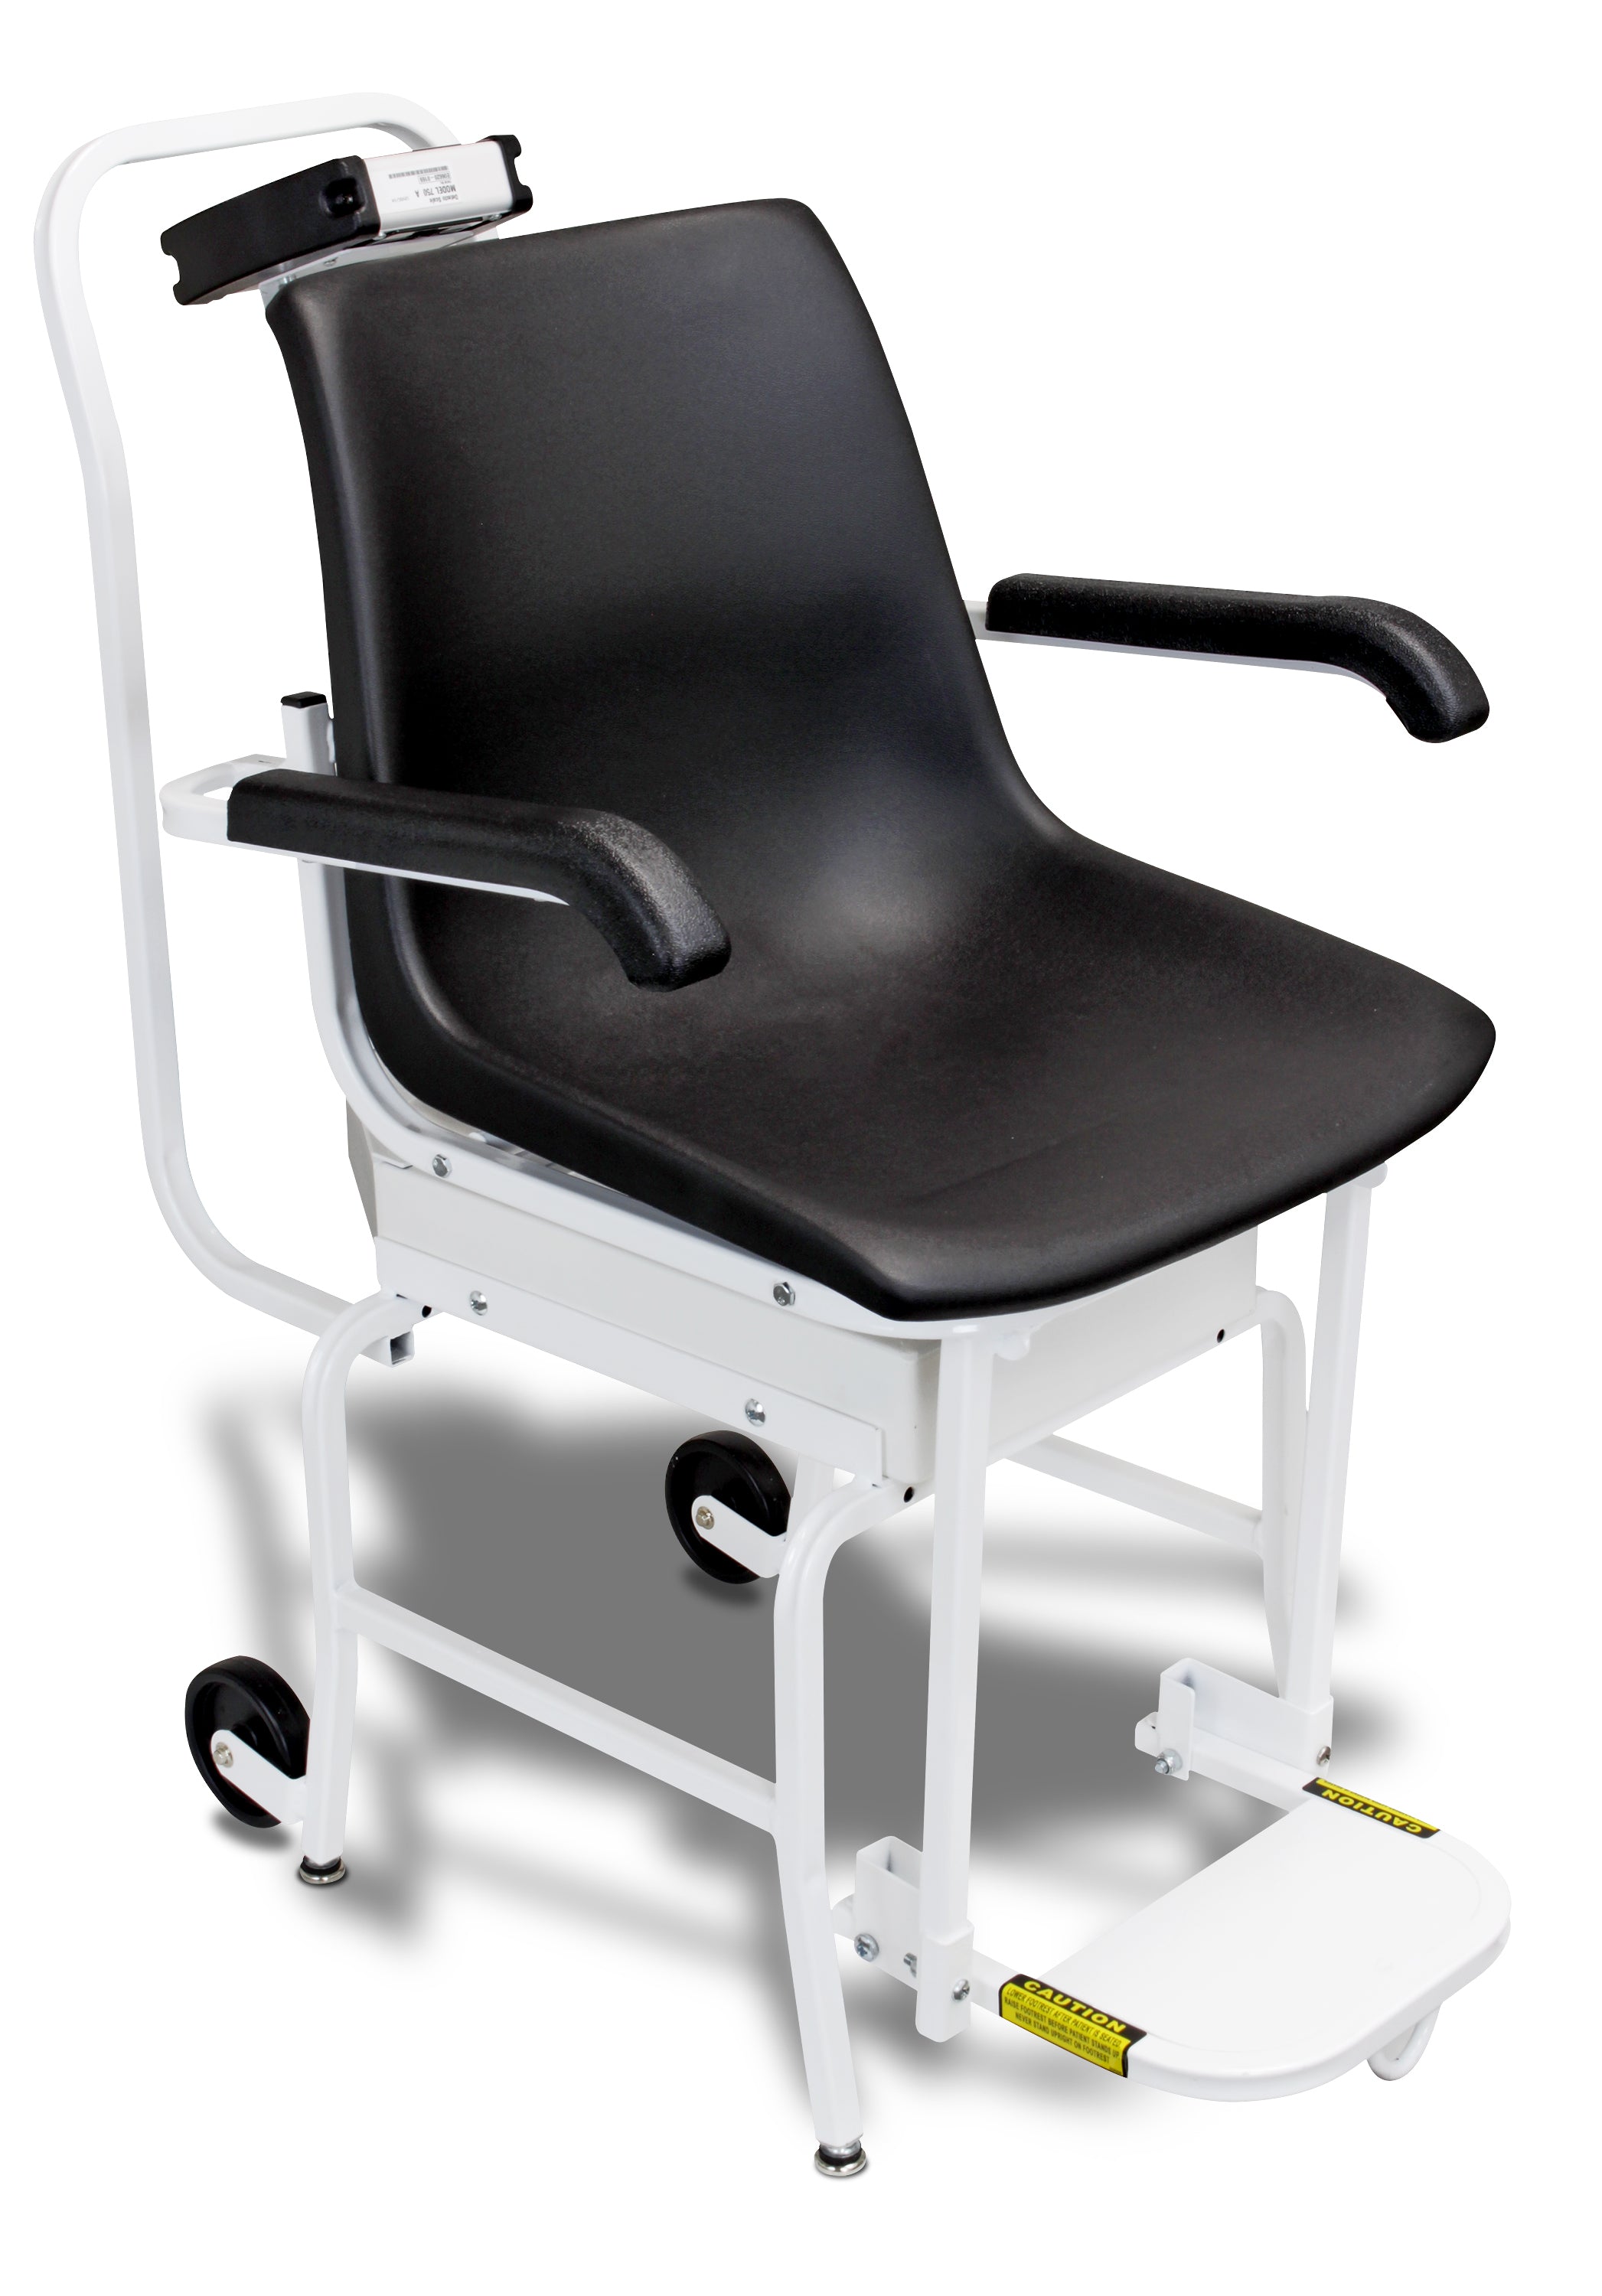 Detecto 6475-C Chair Scale, Digital, 400 lb x .2 lb / 180 kg x .1 kg, BT / WiFi